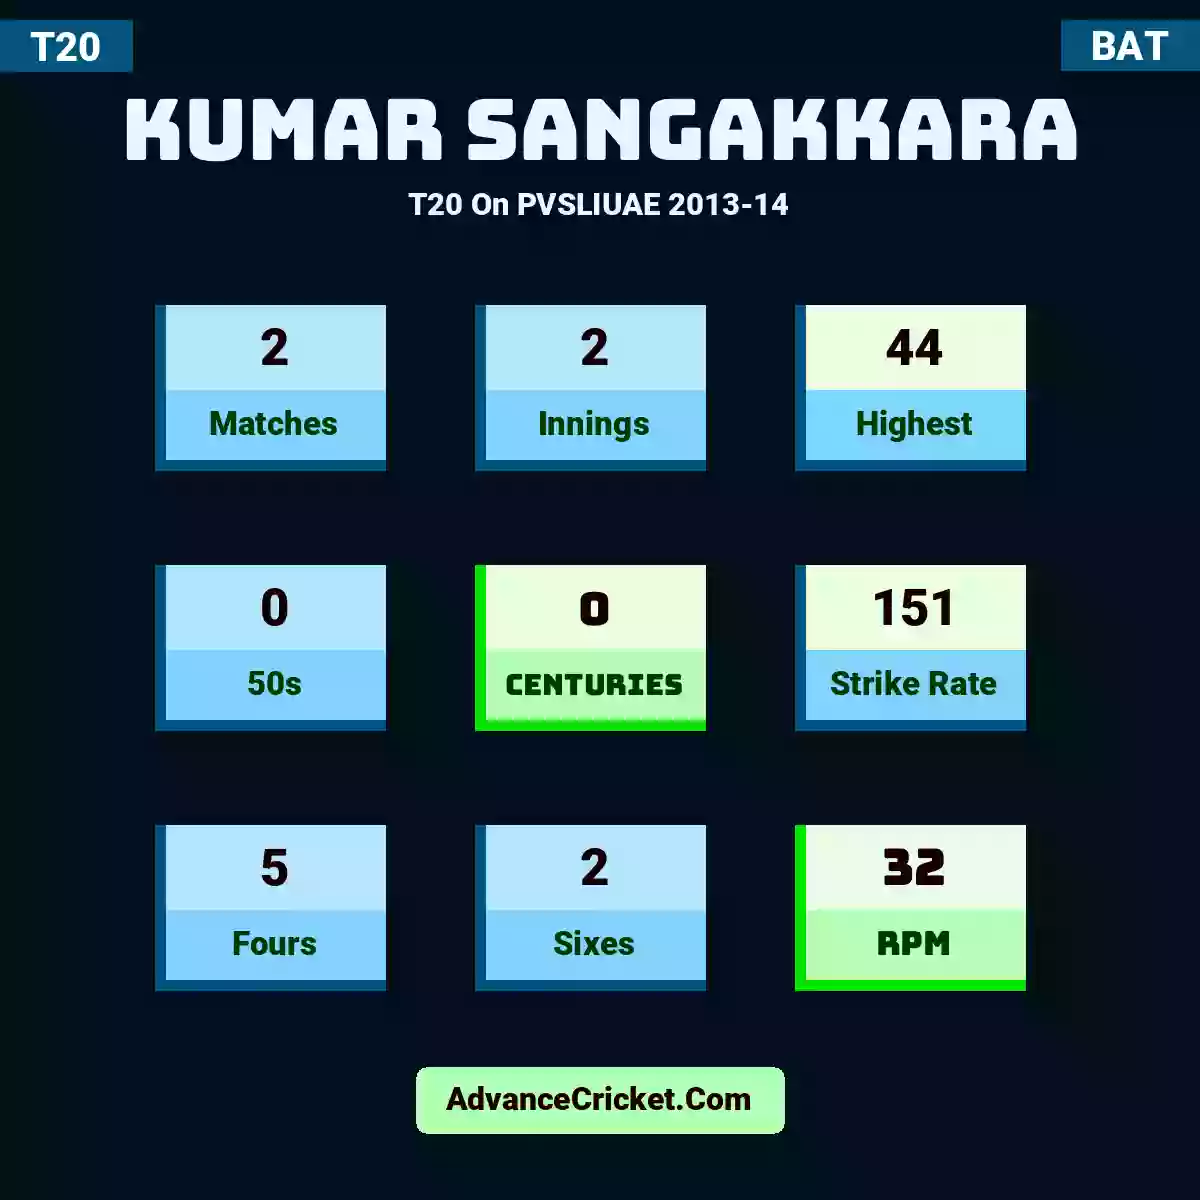 Kumar Sangakkara T20  On PVSLIUAE 2013-14, Kumar Sangakkara played 2 matches, scored 44 runs as highest, 0 half-centuries, and 0 centuries, with a strike rate of 151. K.Sangakkara hit 5 fours and 2 sixes, with an RPM of 32.